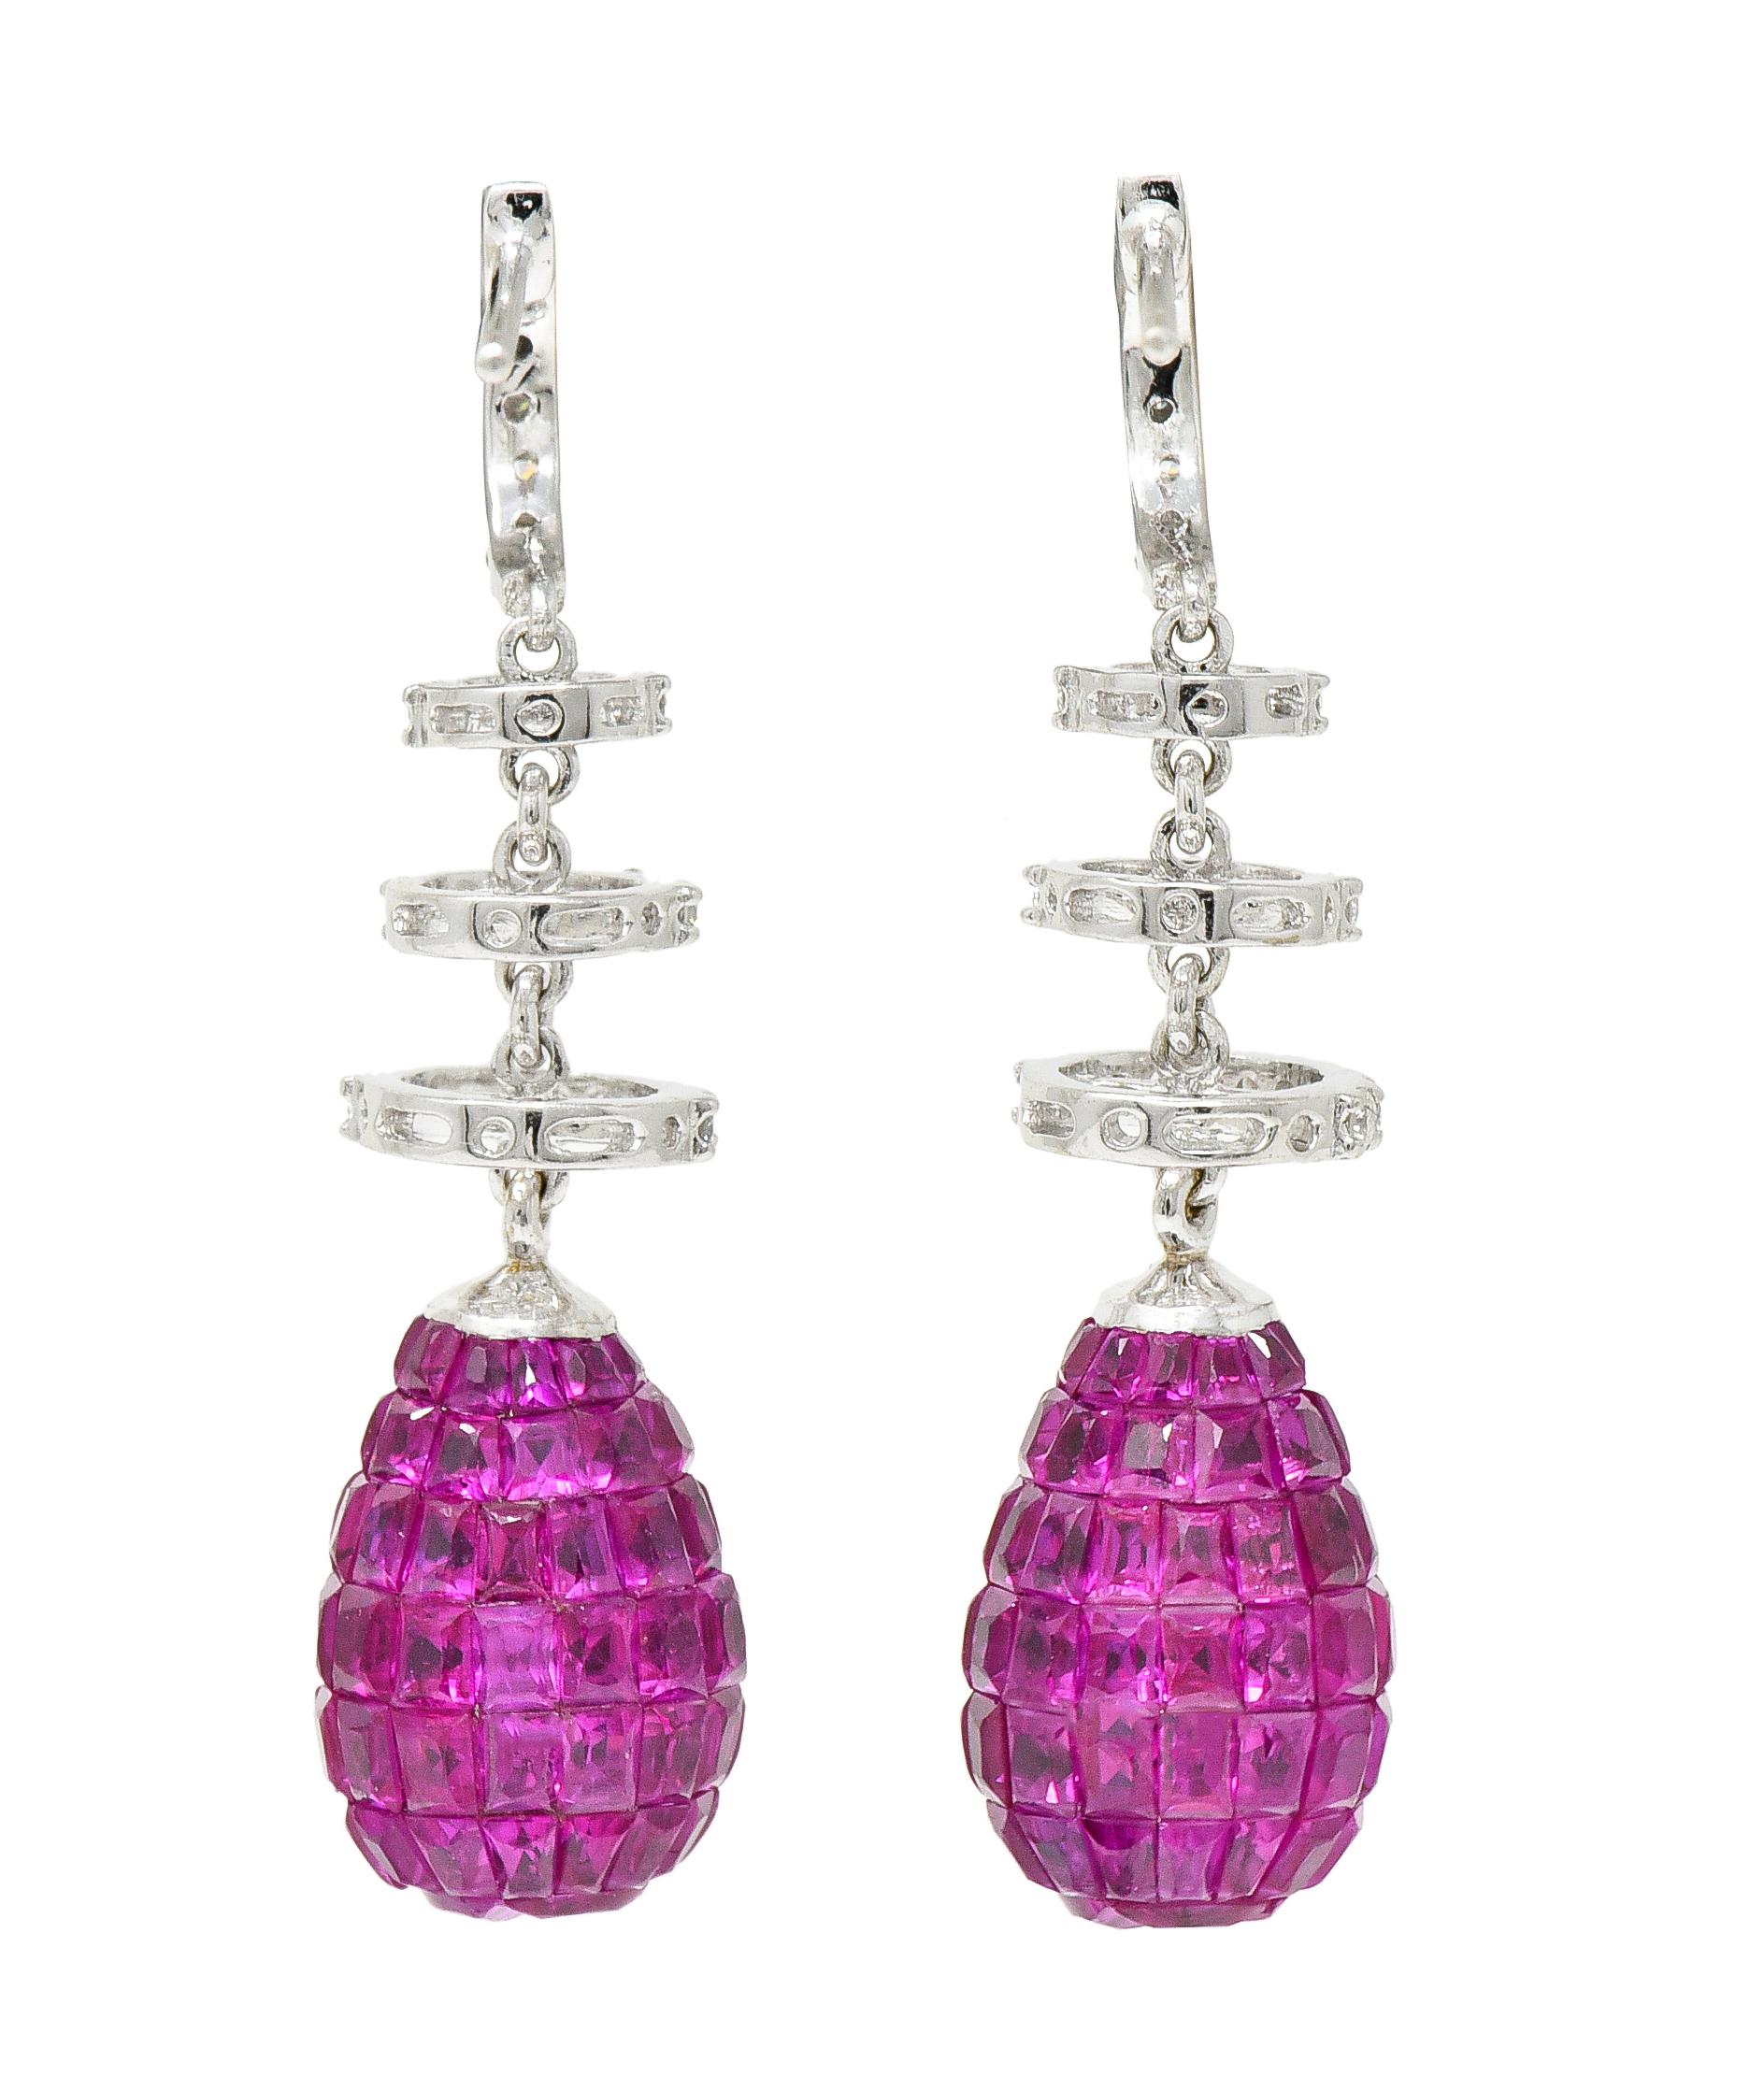 Brilliant Cut Contemporary 8.70 Carats Ruby Diamond Mystery Set Drop Earrings